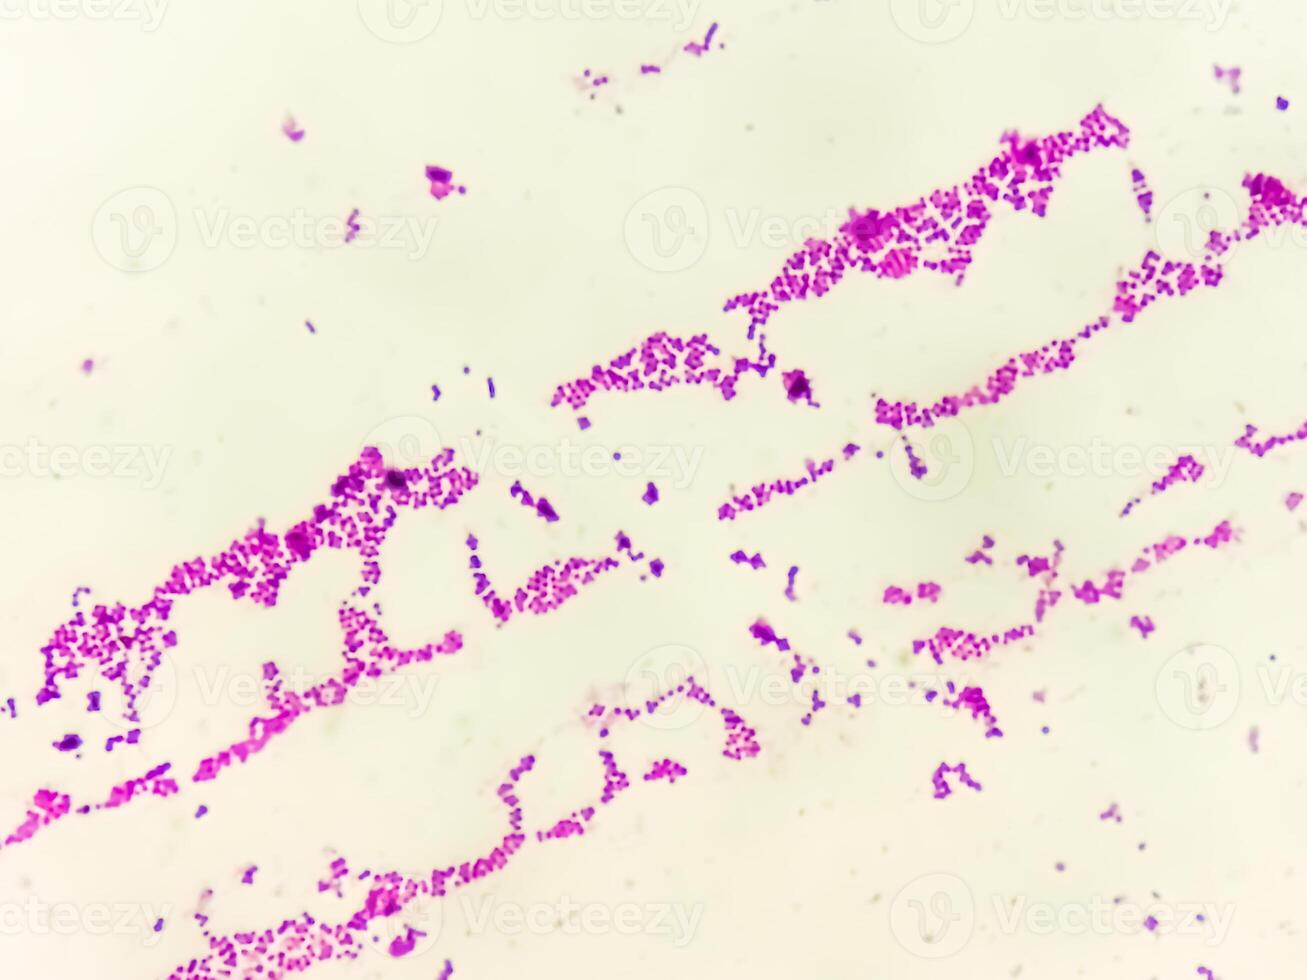 Eiter Gramm befleckt mikroskopisch zeigen Gramm positiv Bakterien. foto